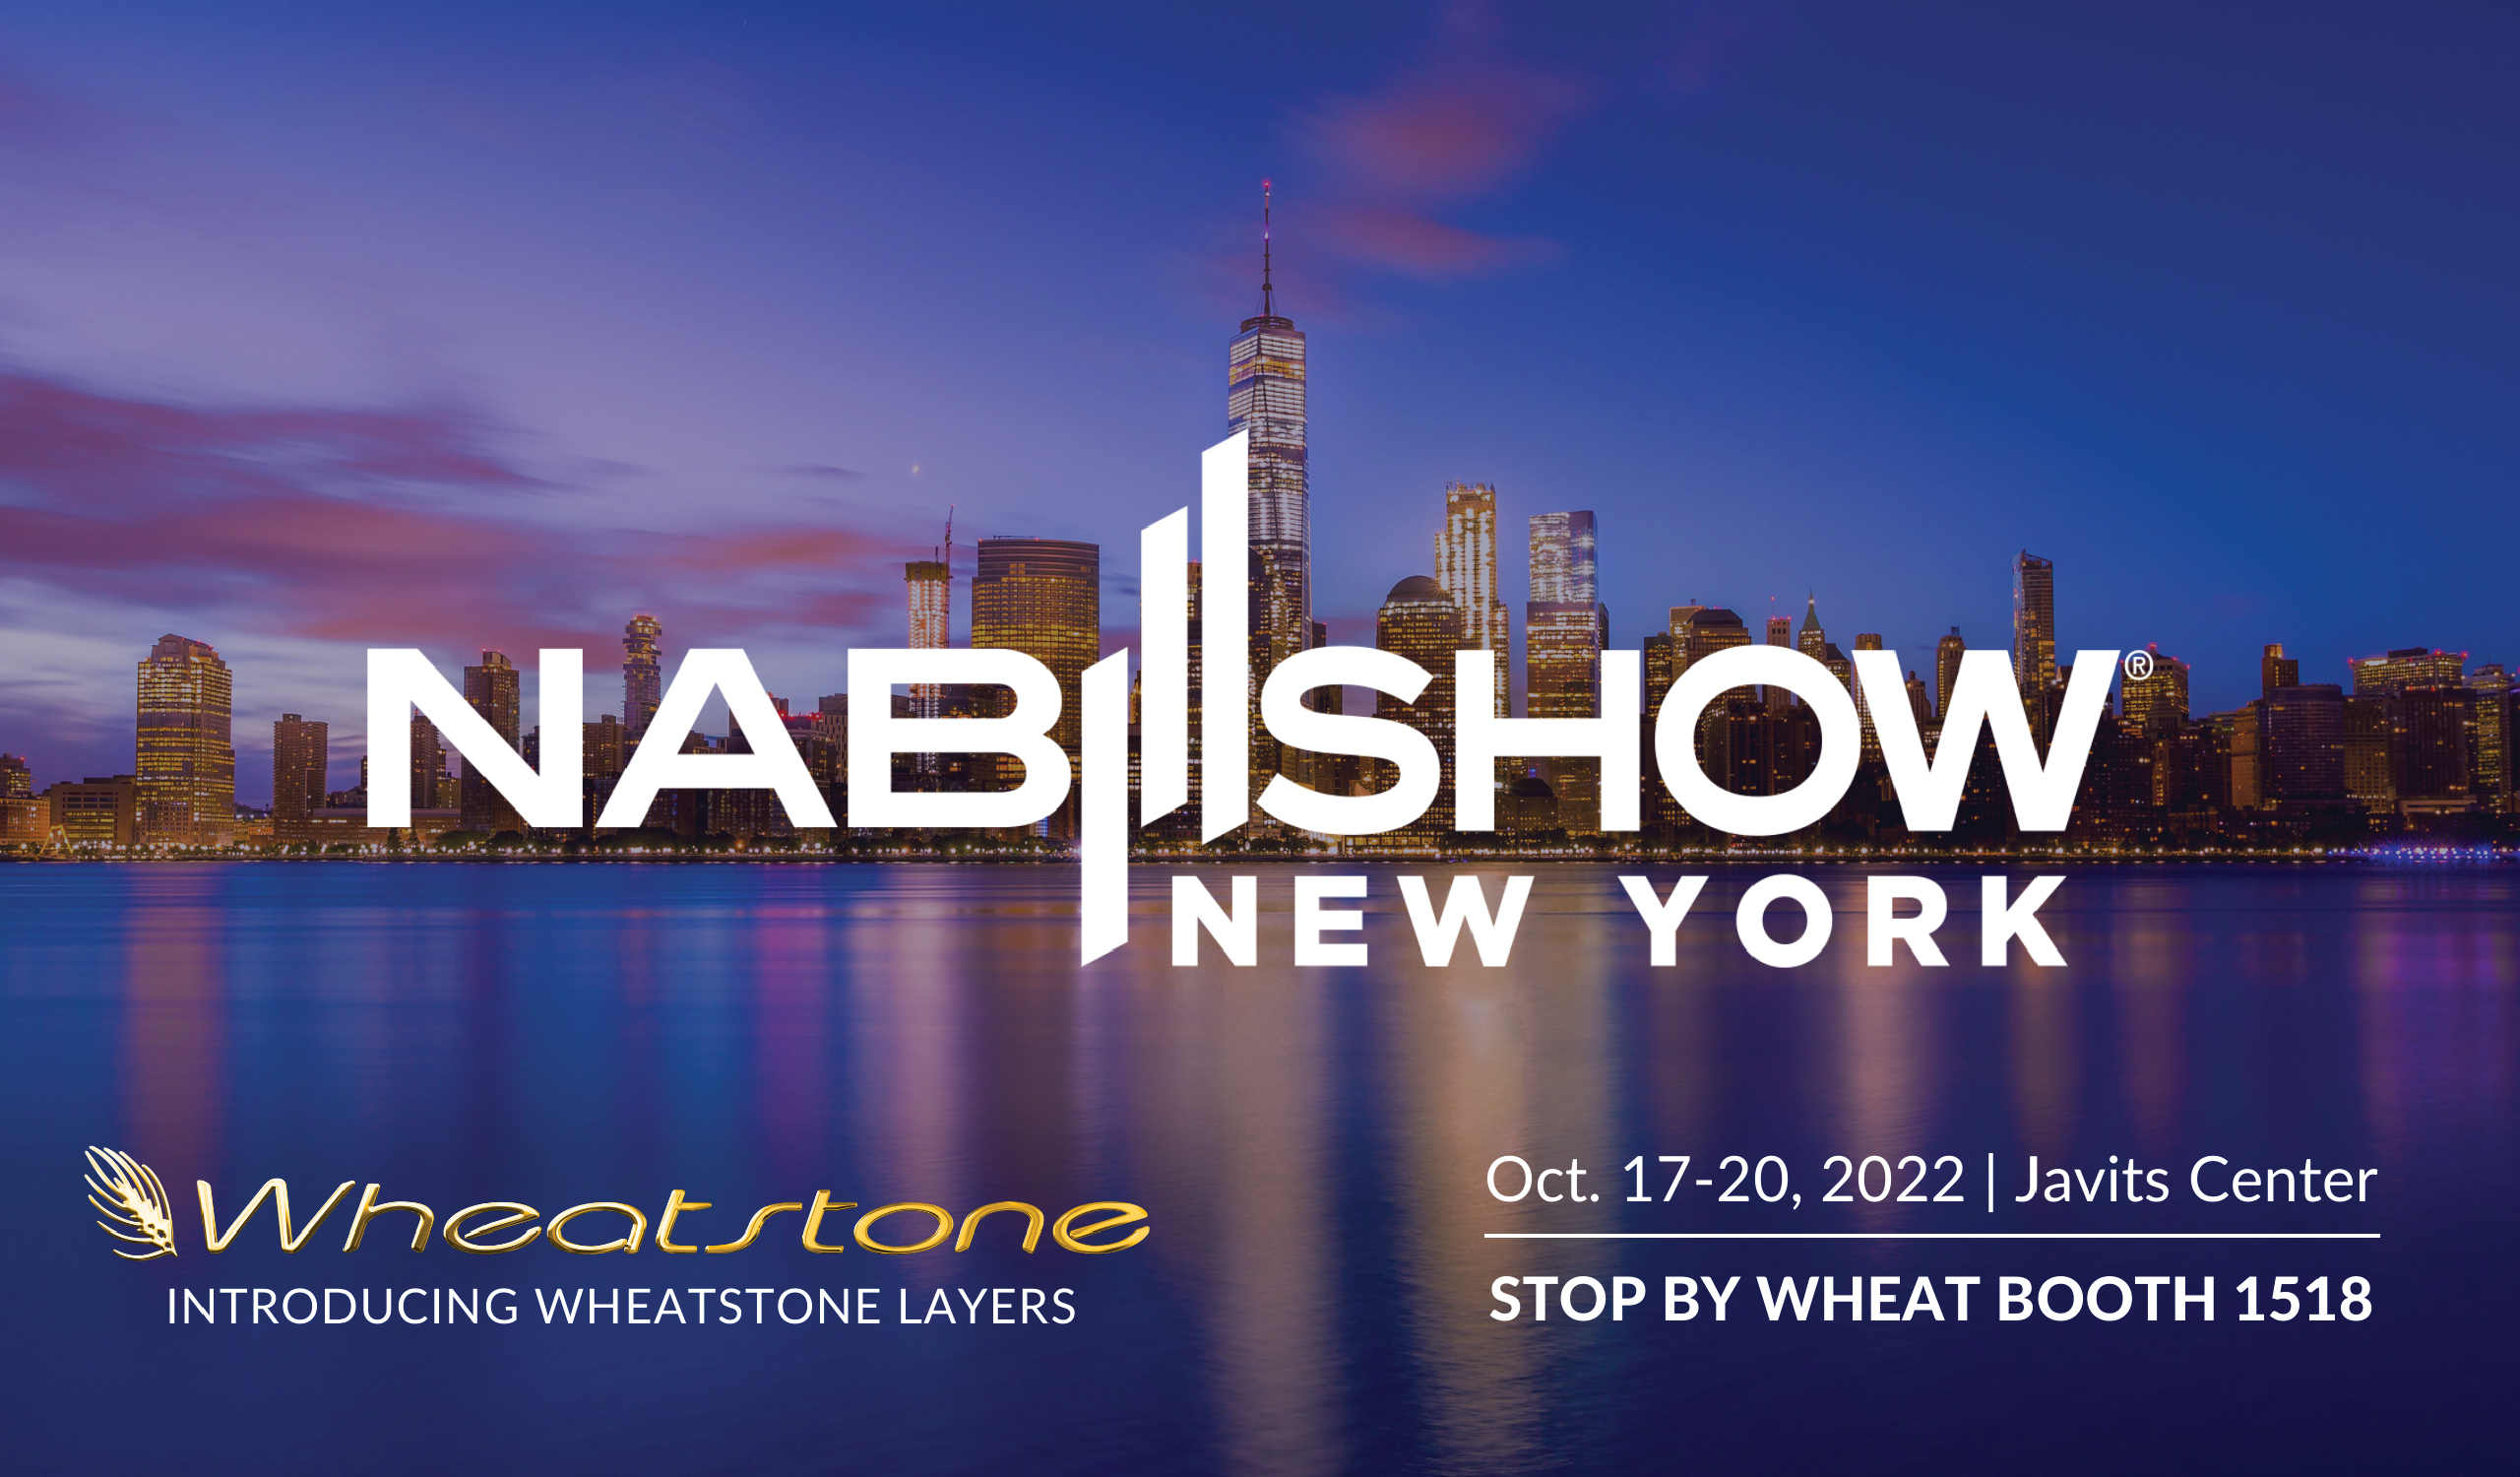 NAB Show New York Wheat Booth 1518